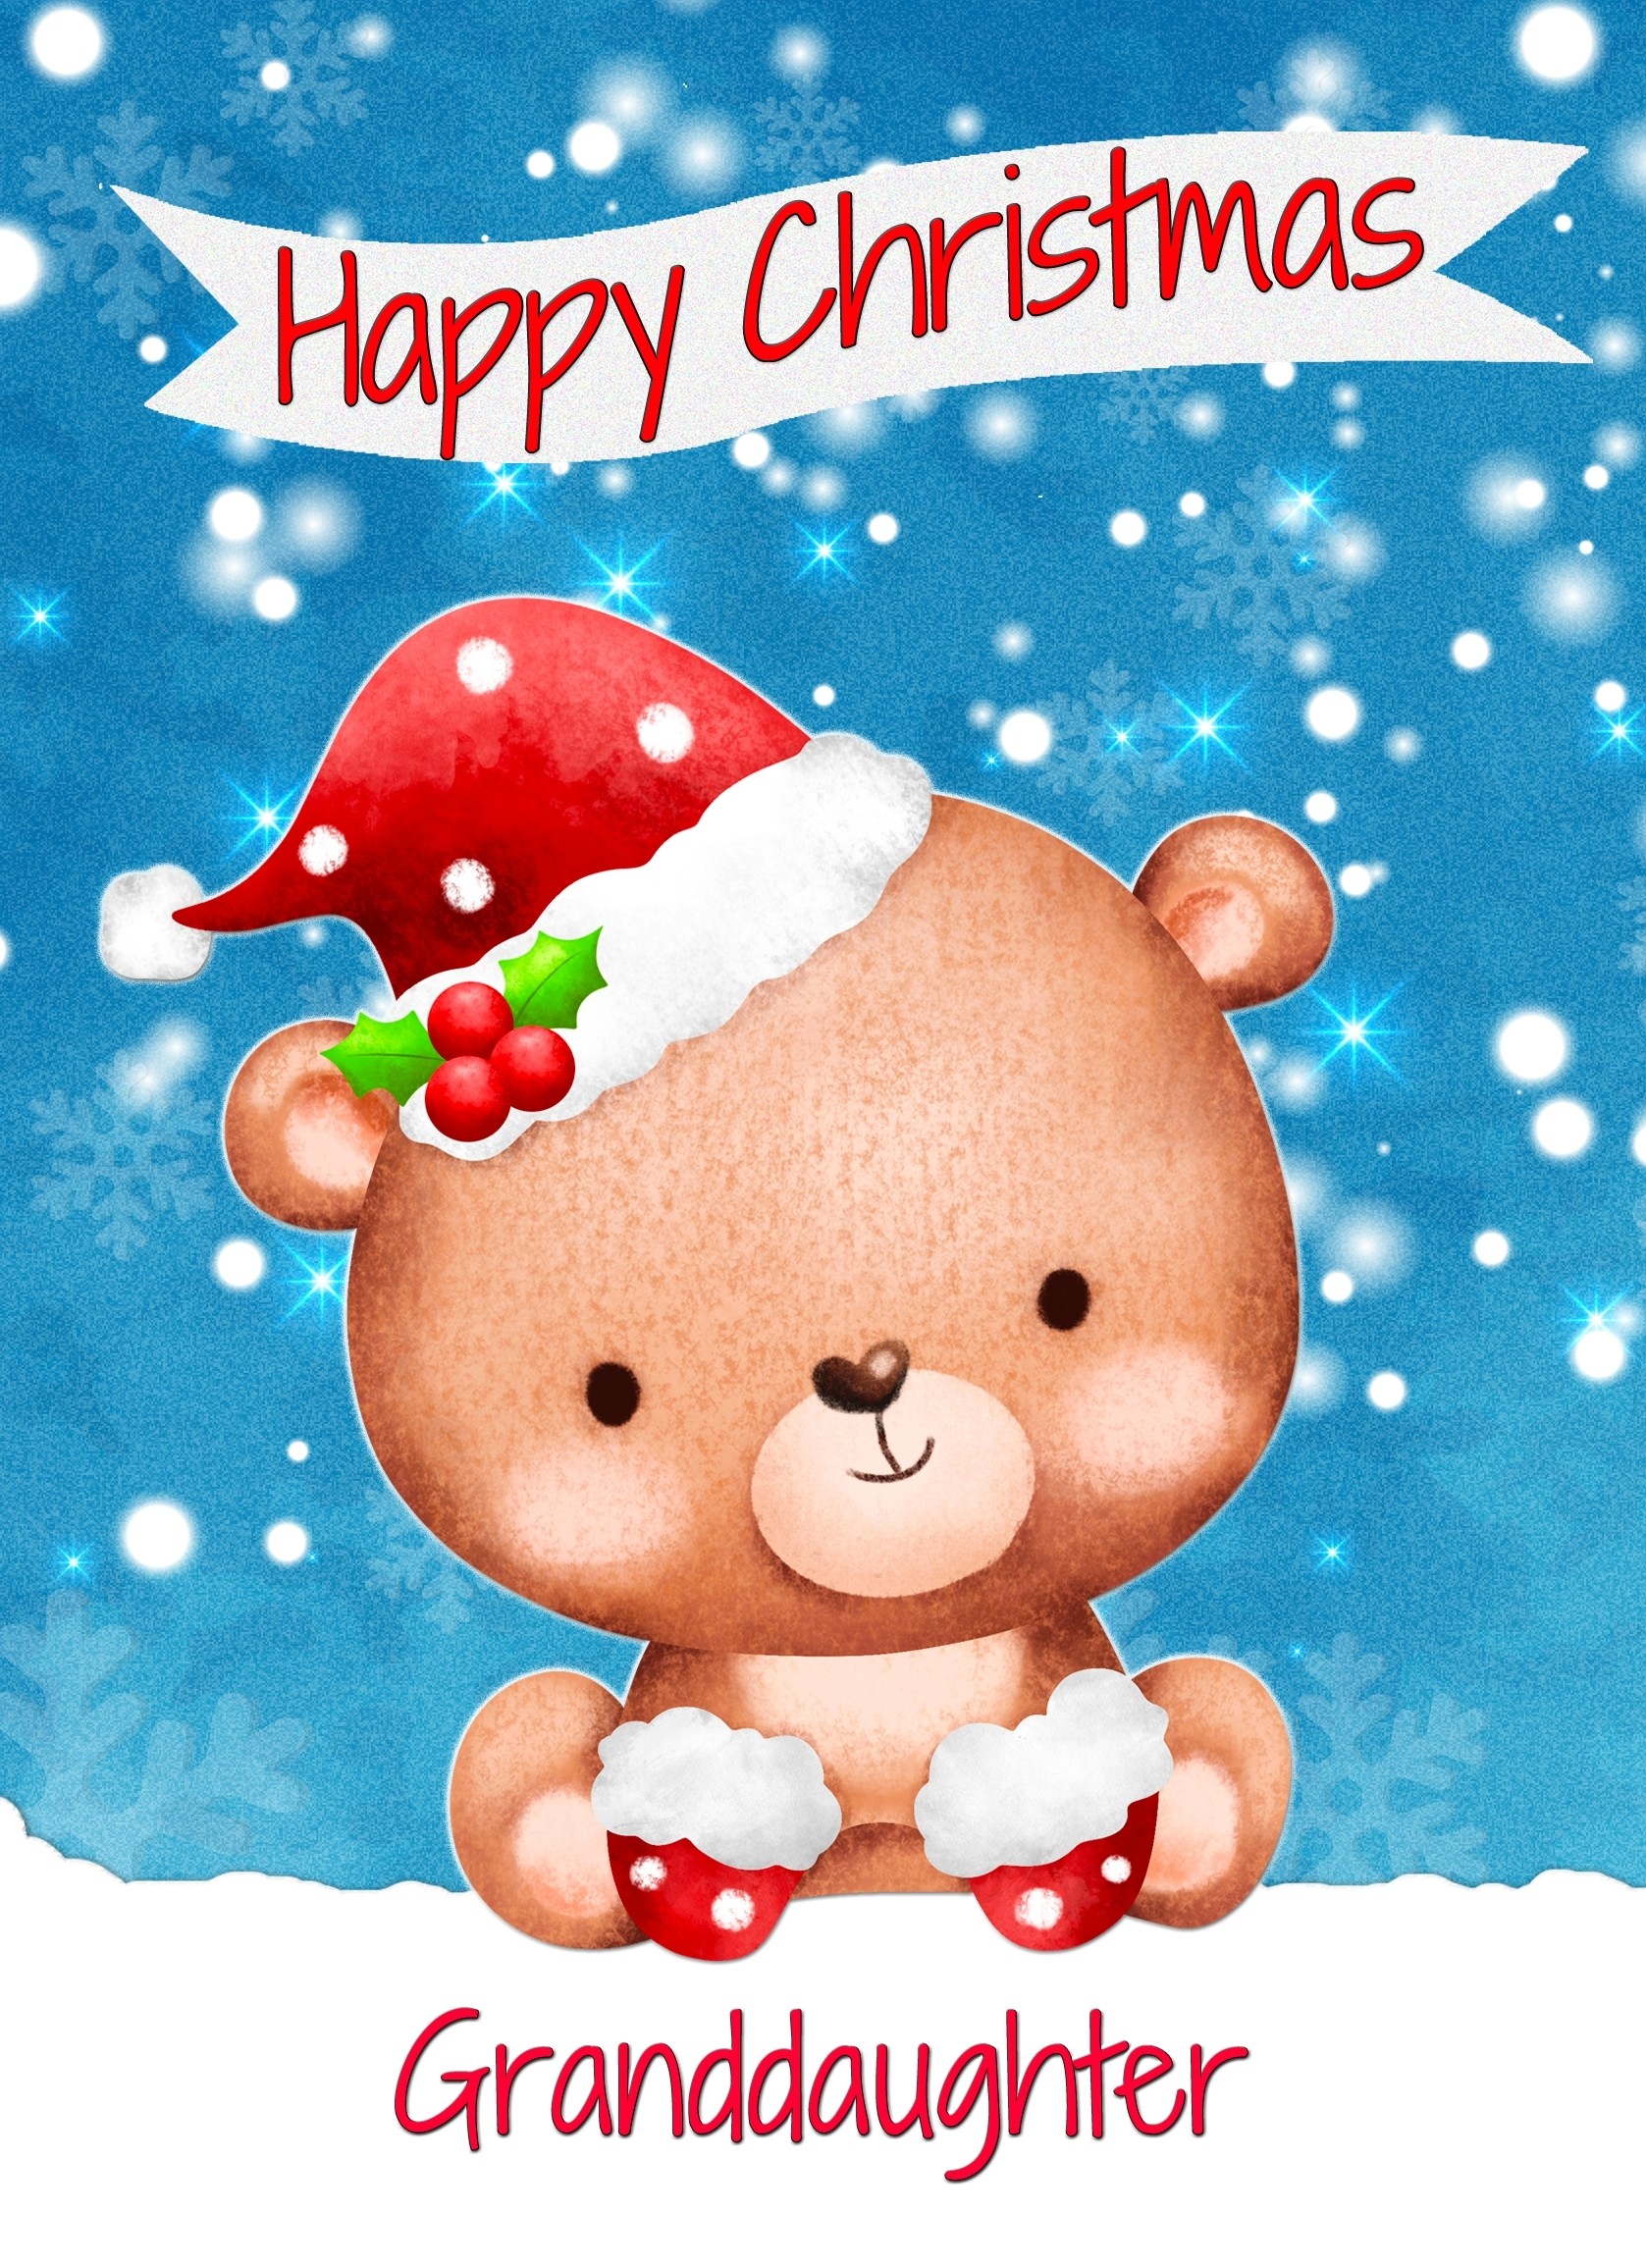 Christmas Card For Granddaughter (Happy Christmas, Bear)